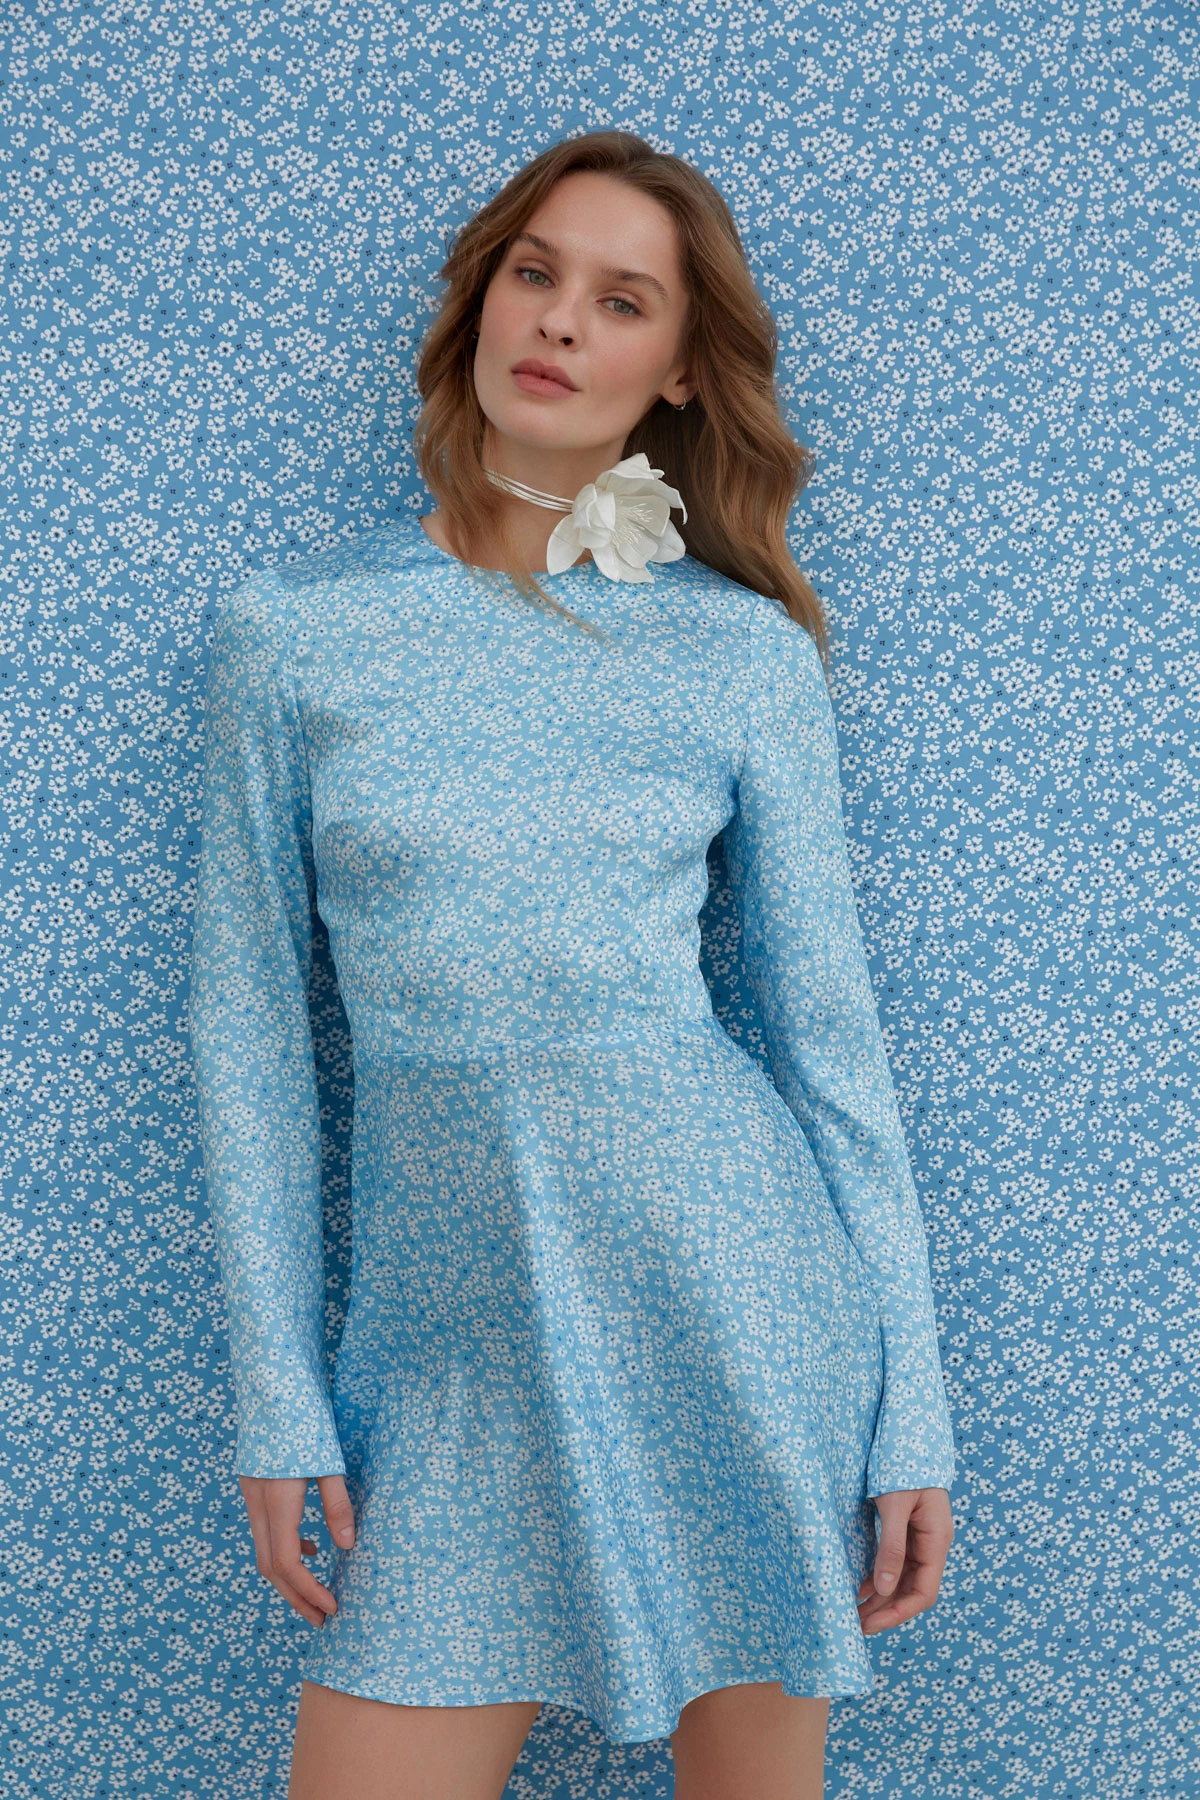 Short blue satin dress in "milky flowers" print, photo 2